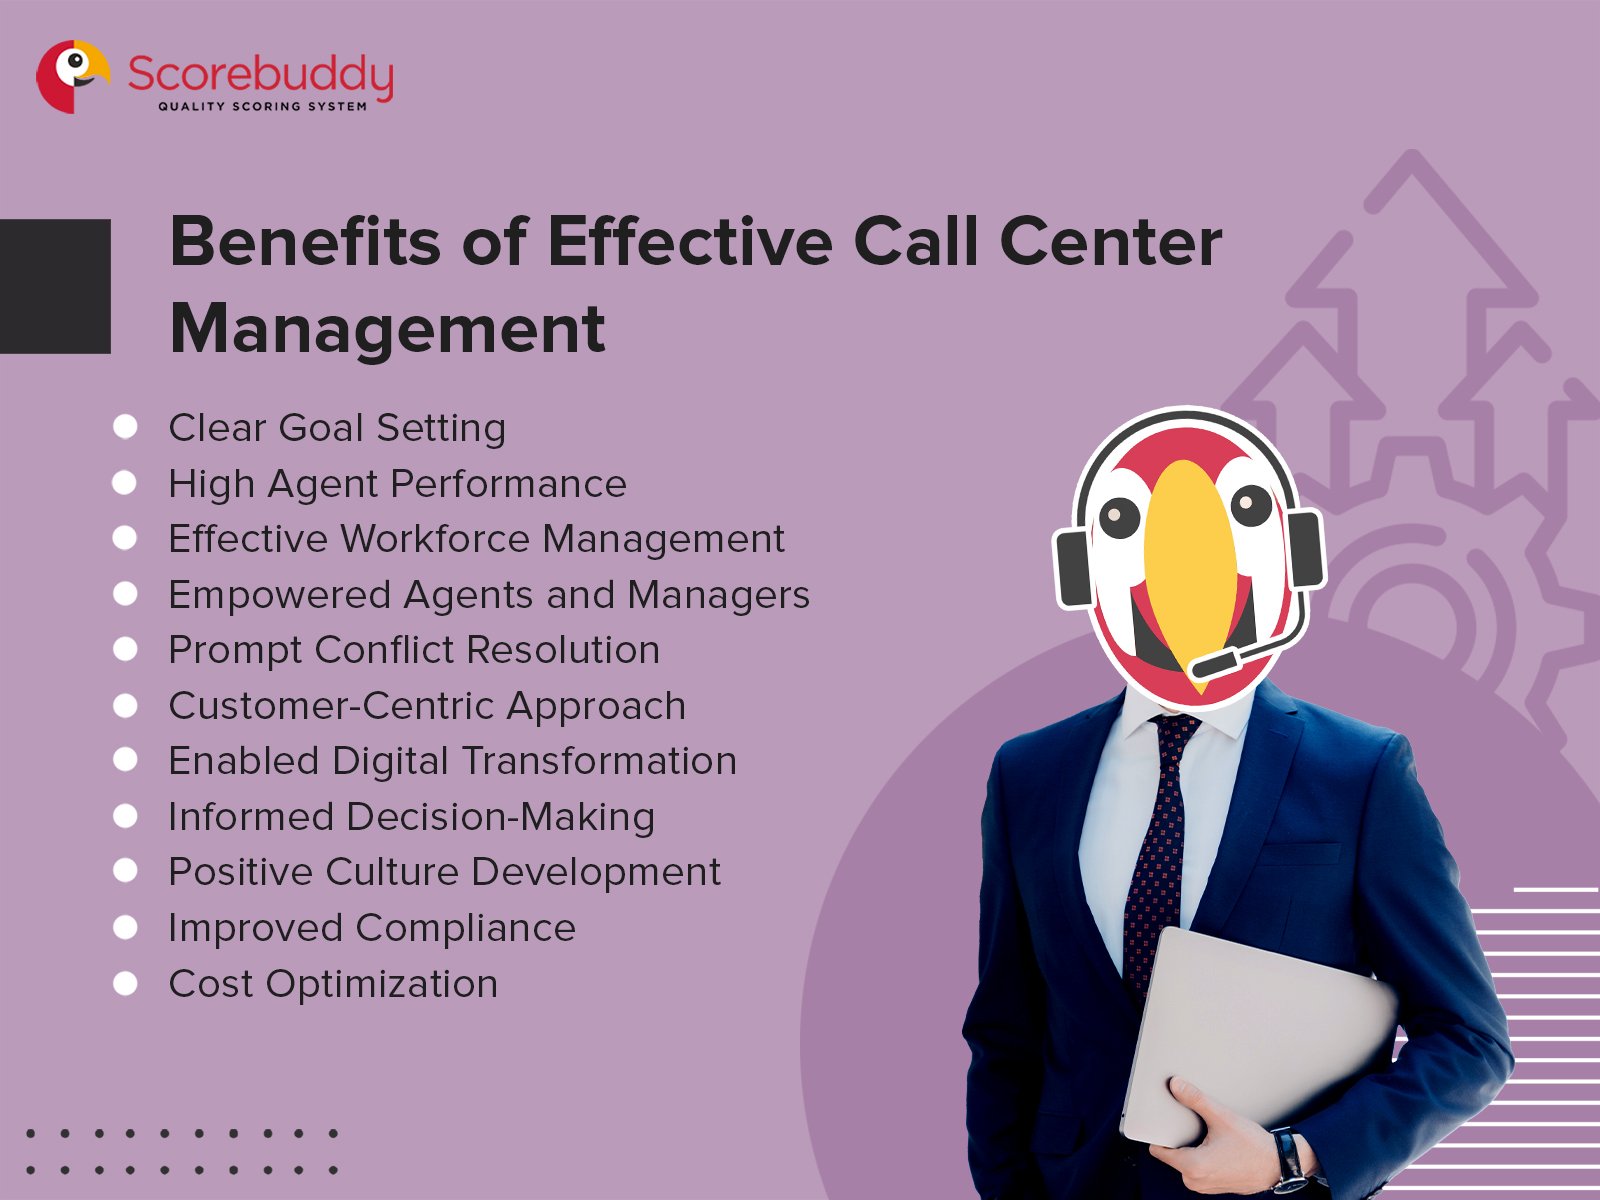 Benefits of effective call center management